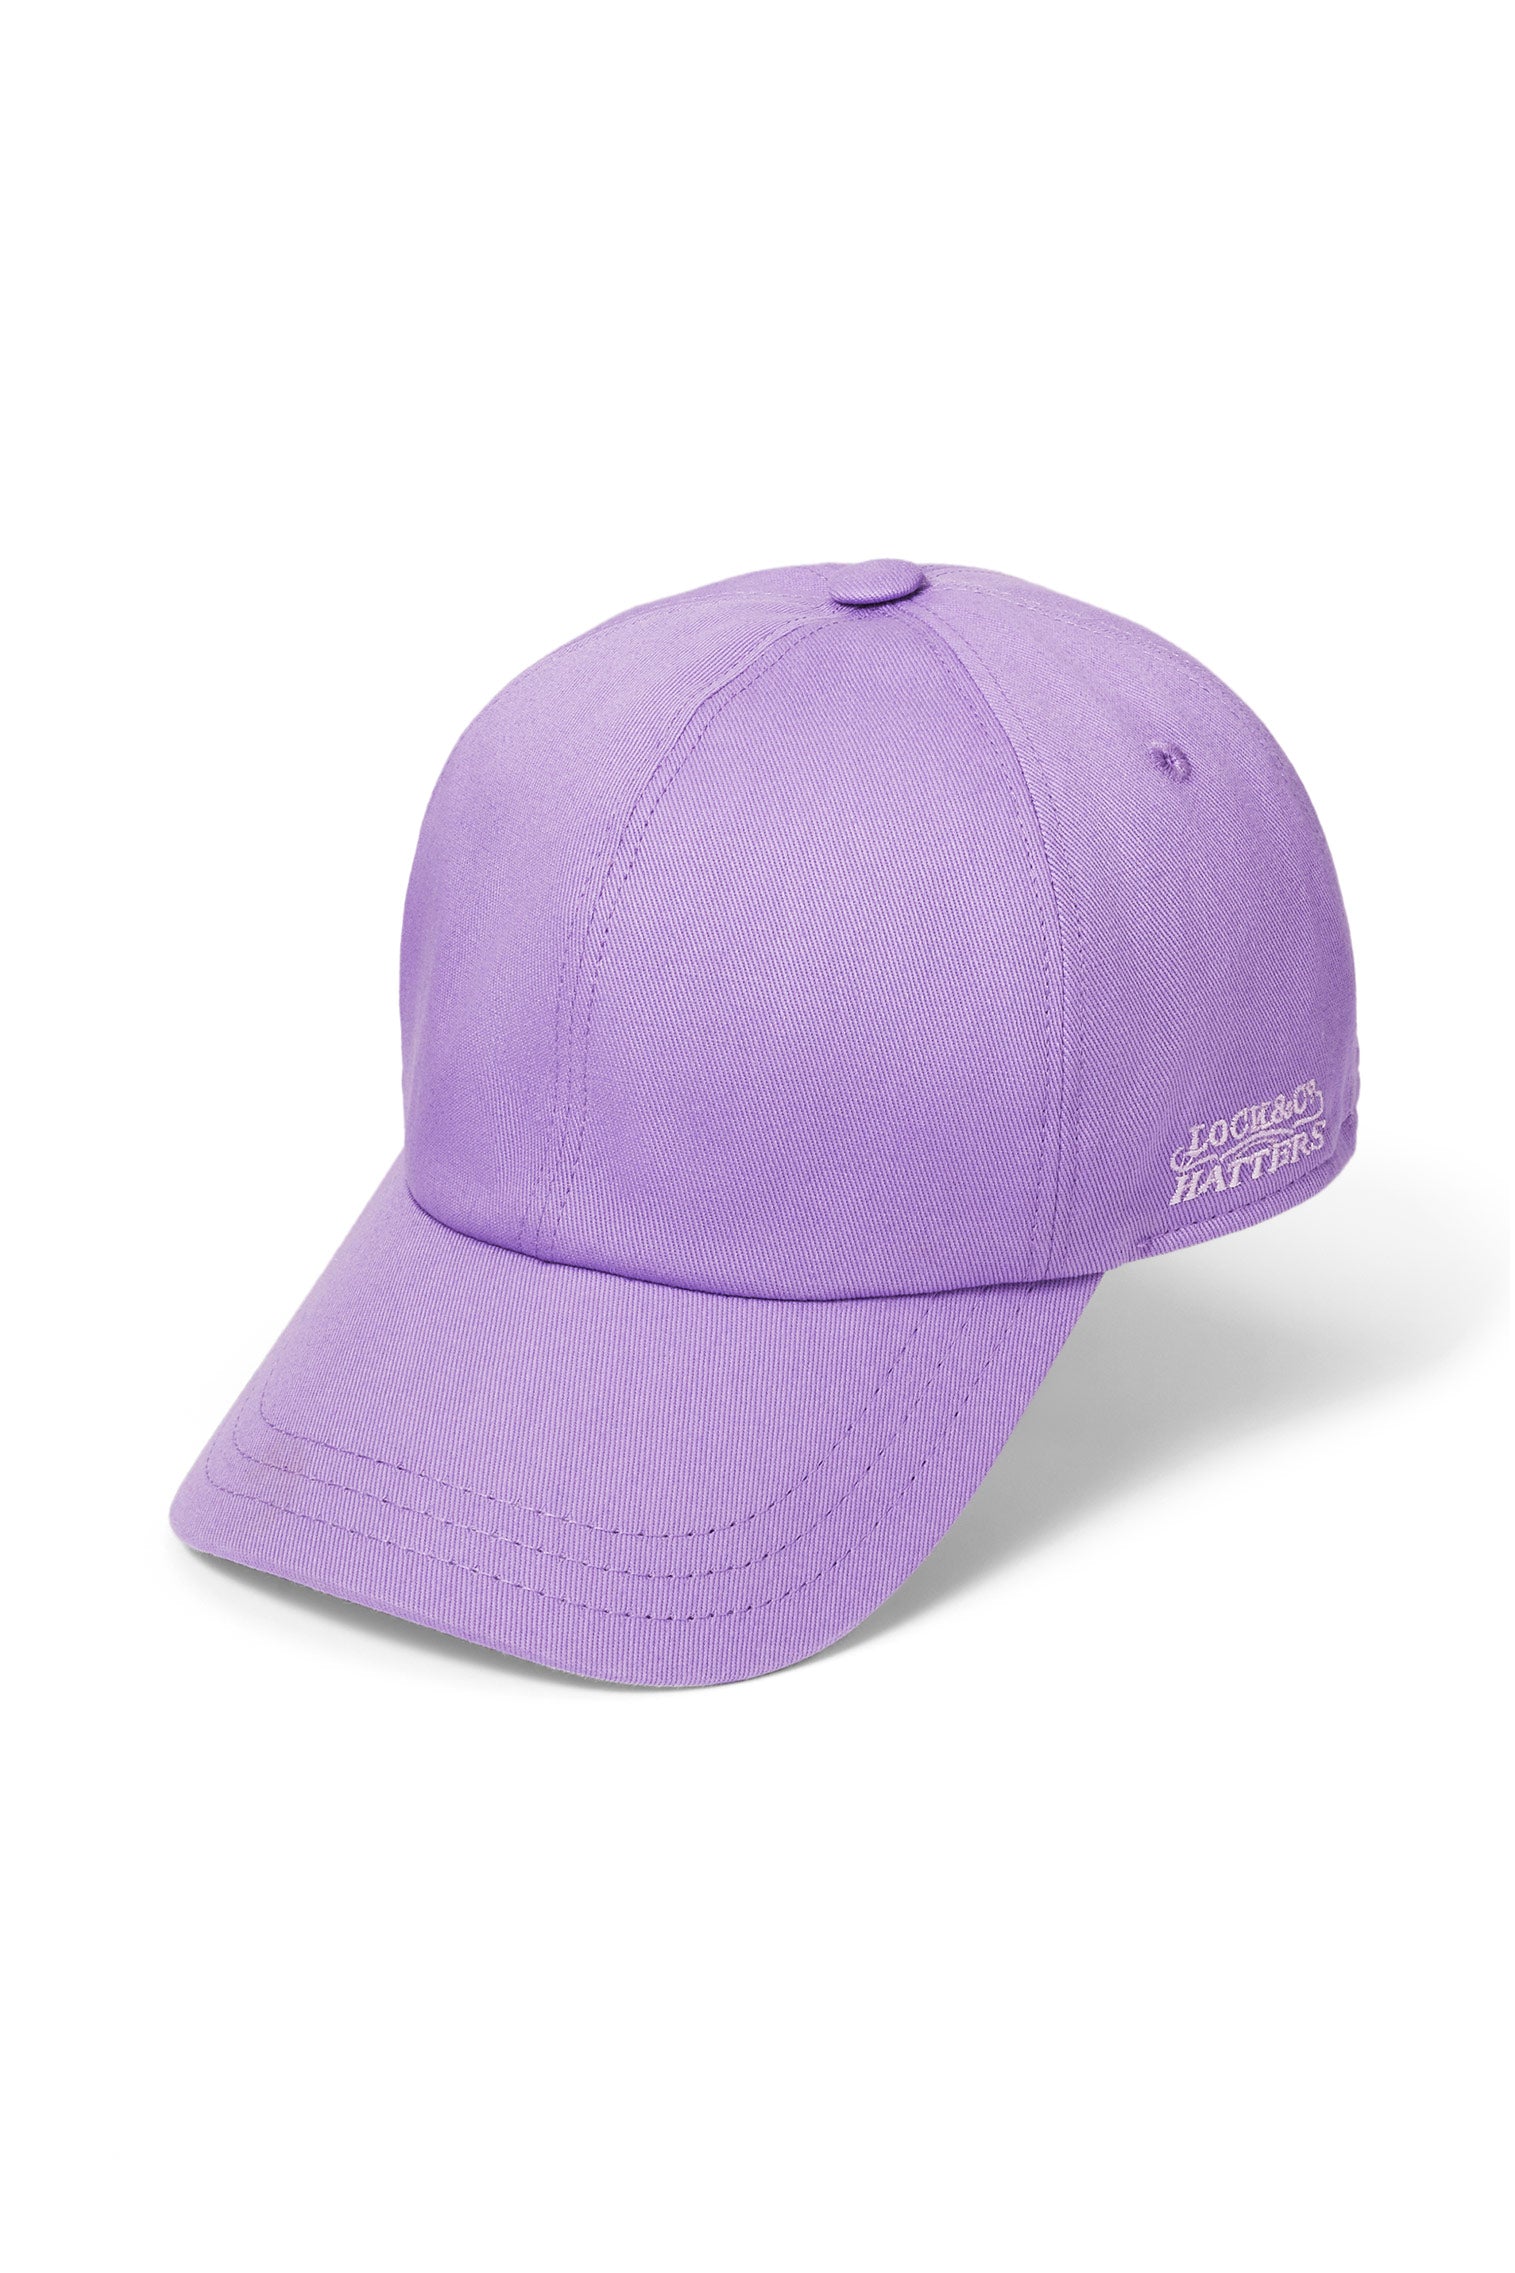 Adjustable Purple Baseball Cap - Baseball Caps - Lock & Co. Hatters London UK